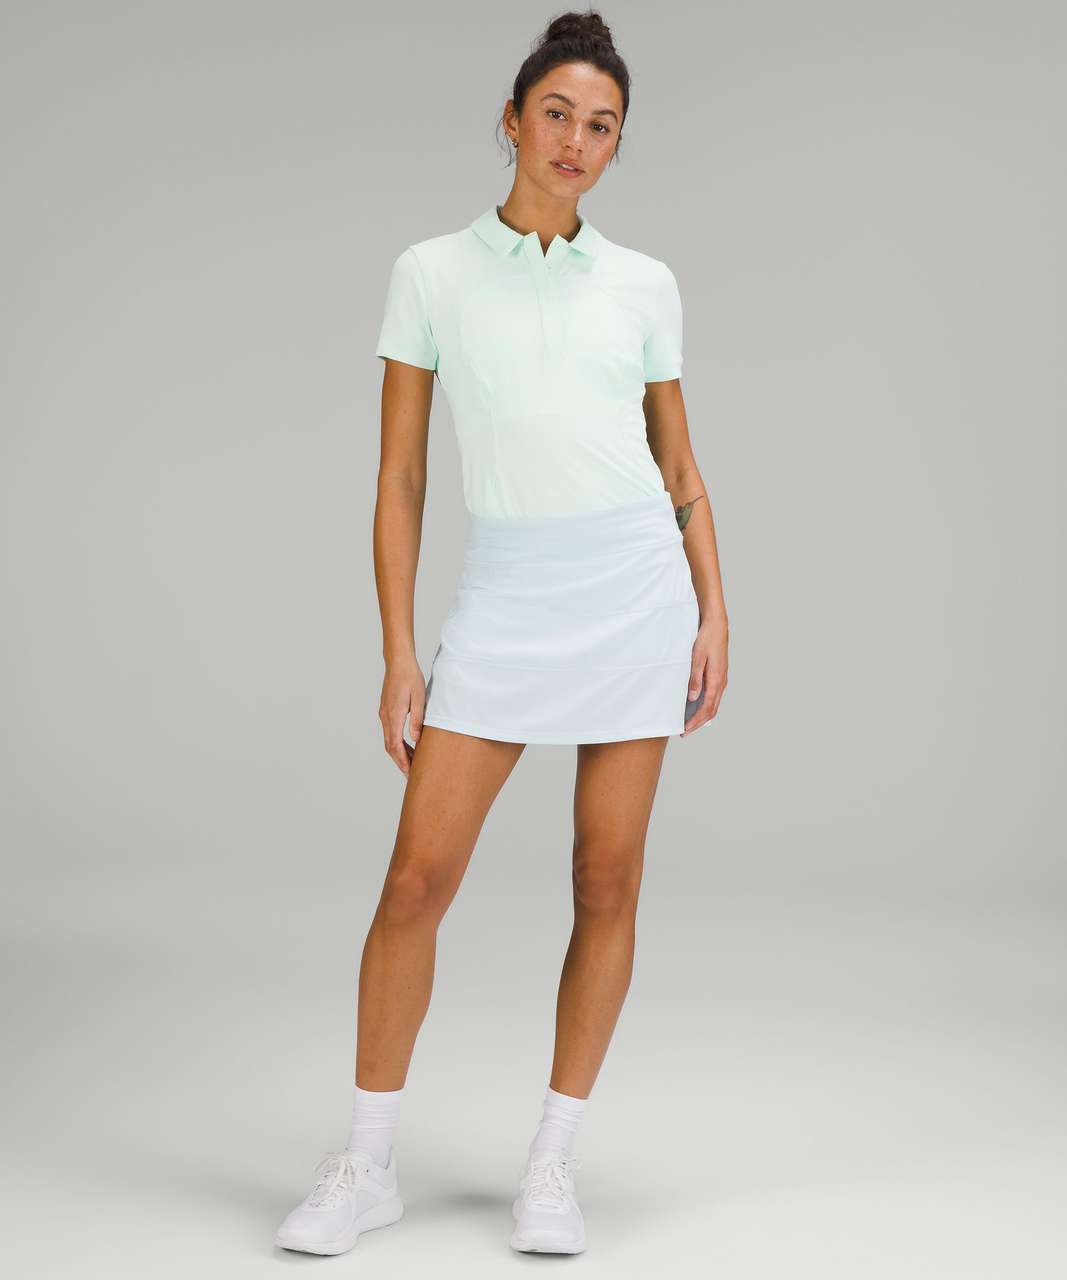 Lululemon Quick-Dry Short-Sleeve Polo Shirt - Mint Moment - lulu 